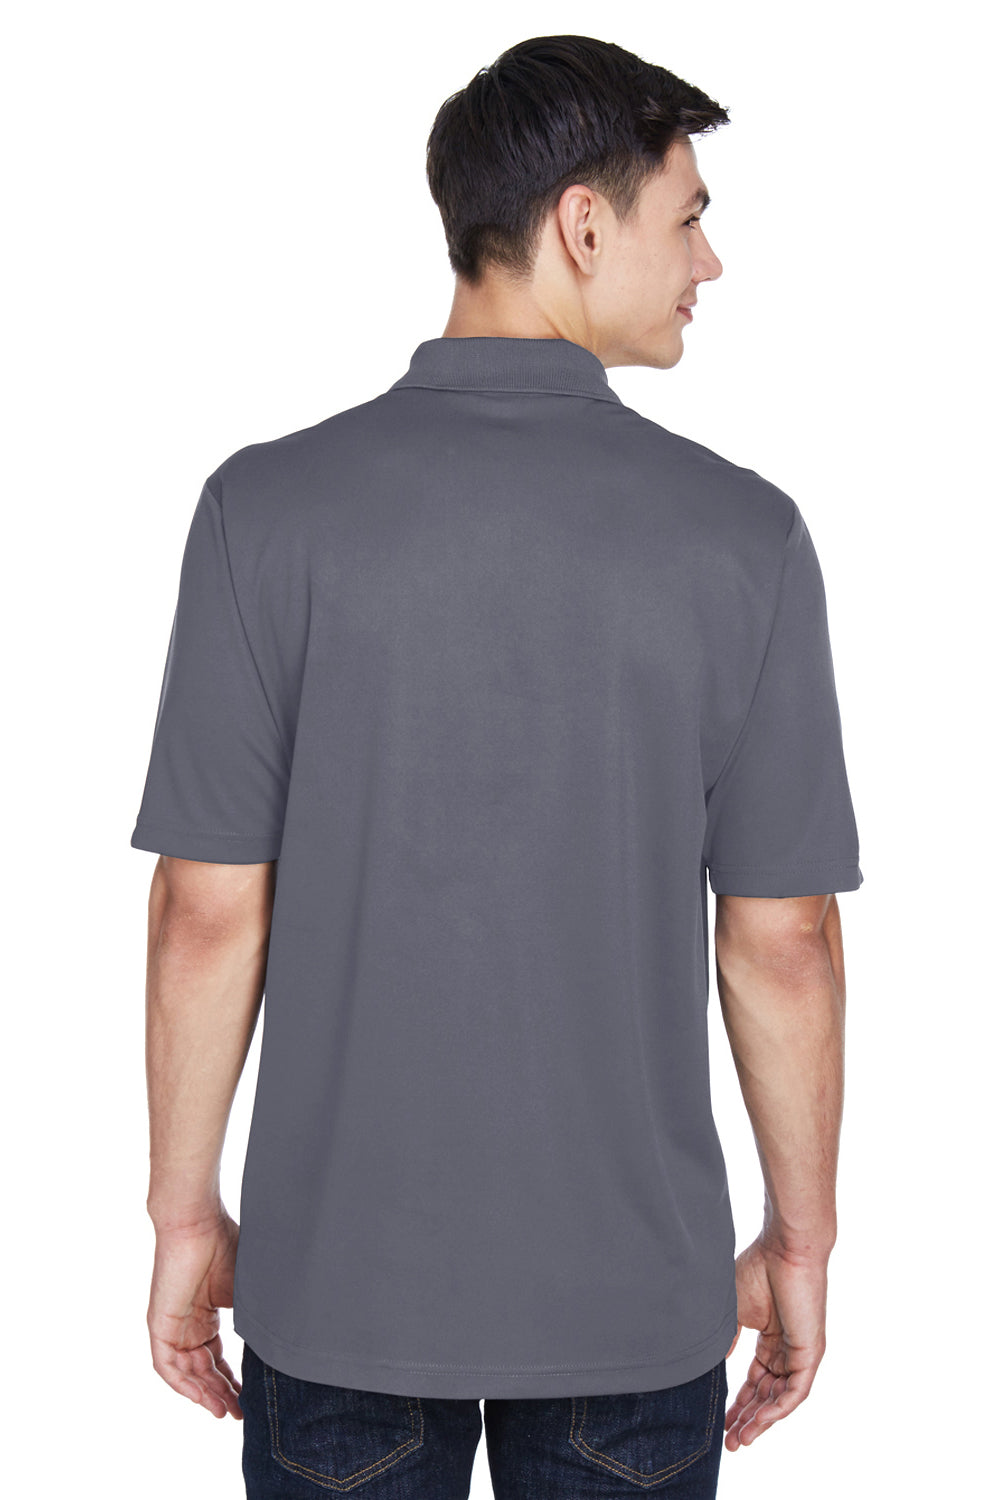 Core 365 CE101 Mens Balance Performance Moisture Wicking Short Sleeve Polo Shirt Royal Blue/Grey Back